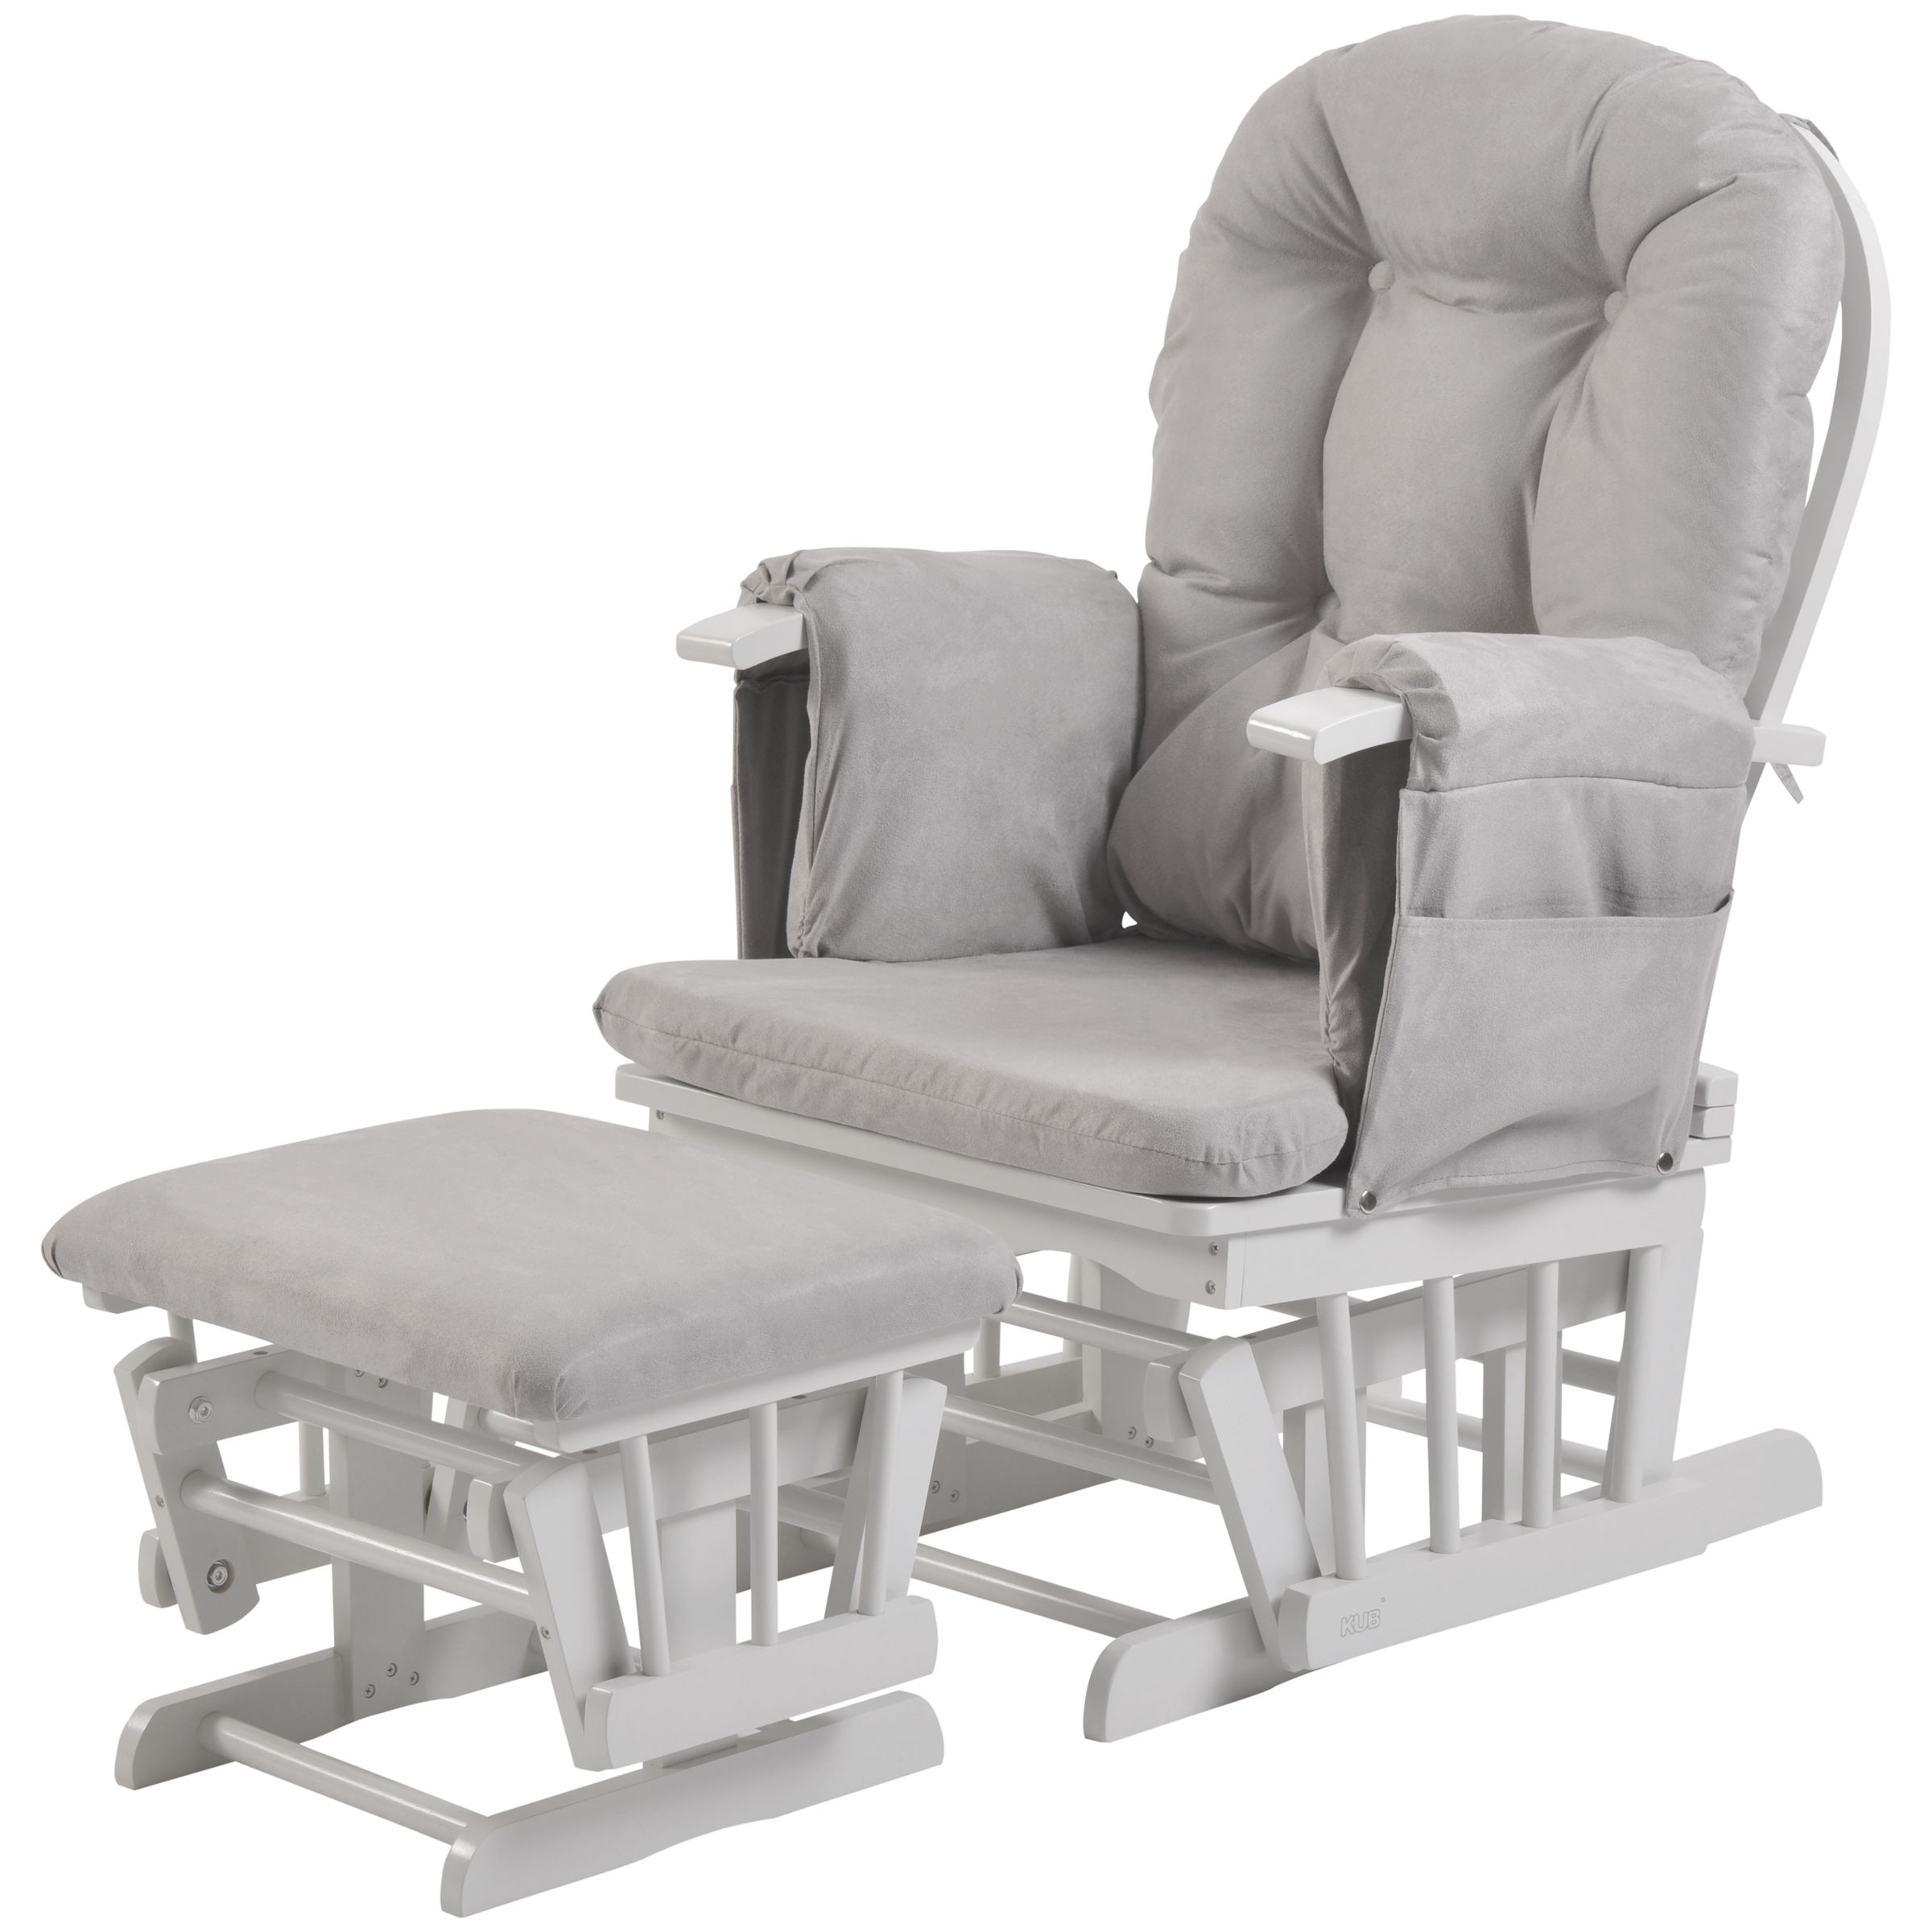 Buy Kub Haywood Reclining Glider Nursing Chair and Footstool, Grey